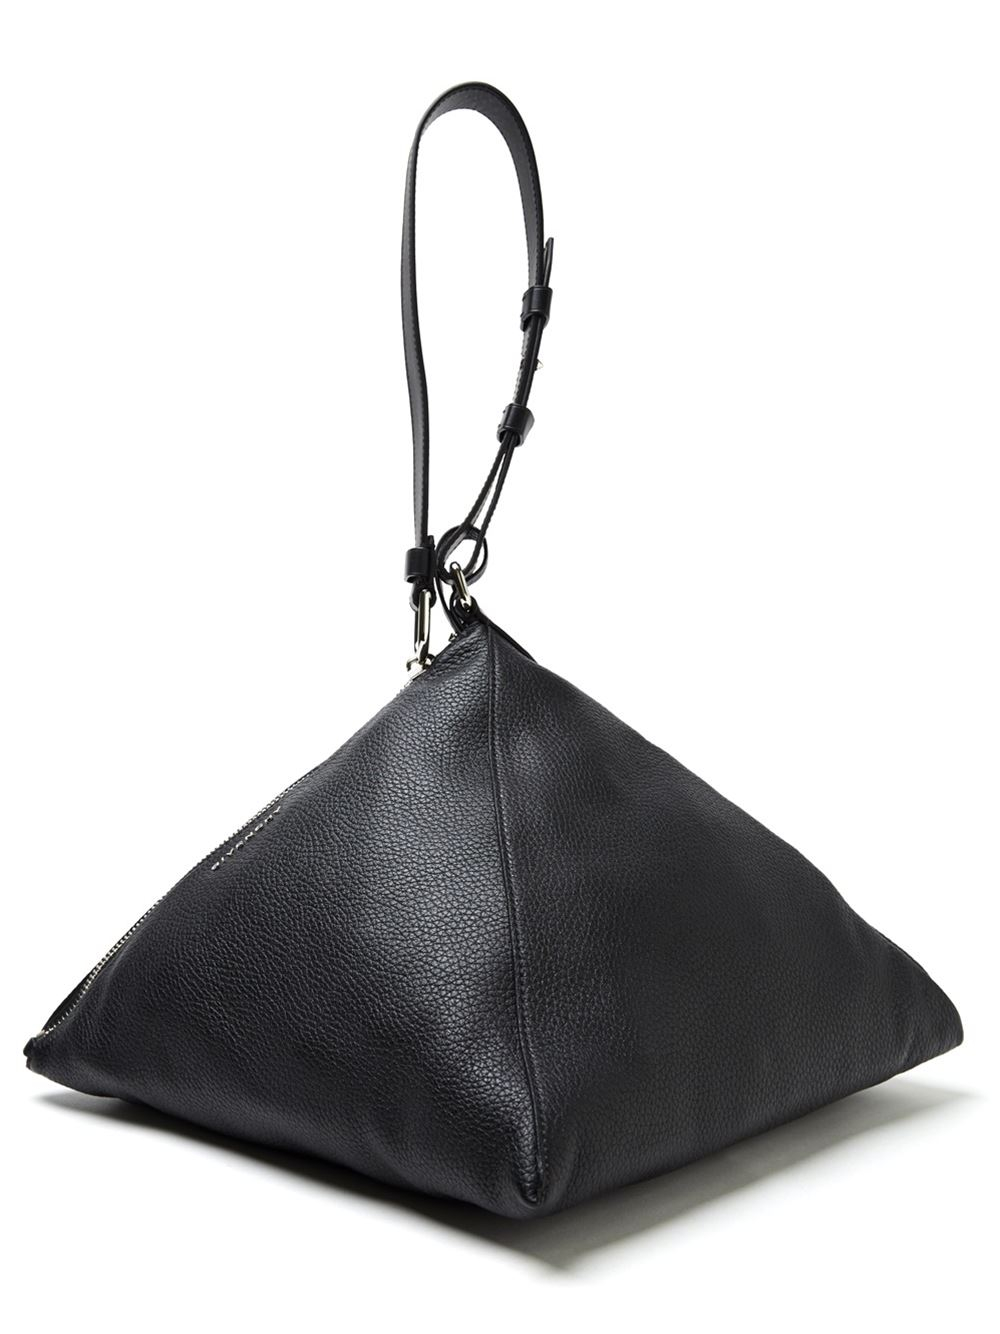 Runway Handbag Cream/Black Pyramid - Women's Bags